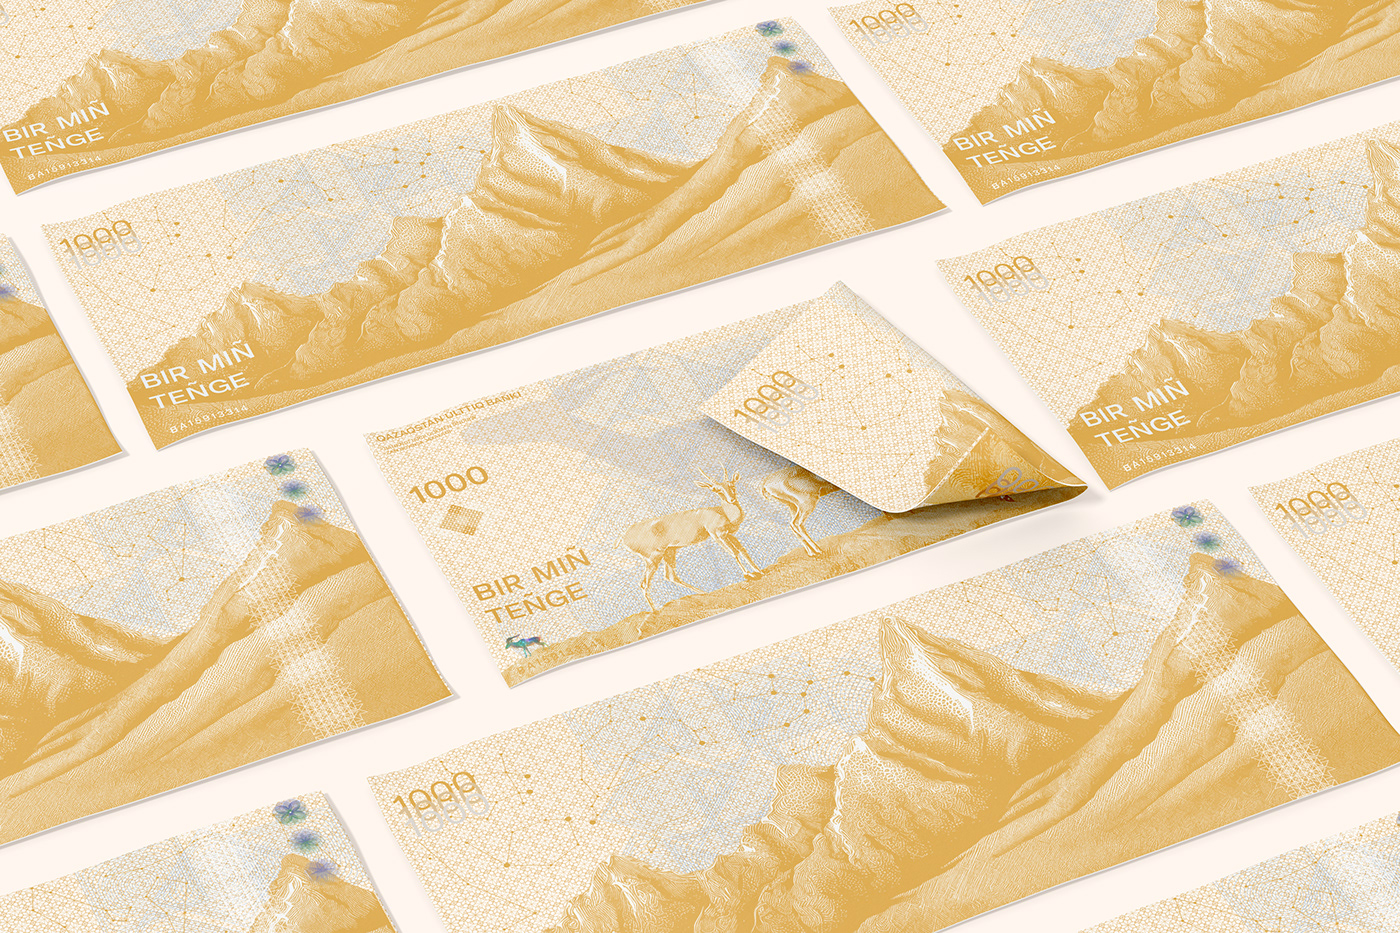 Banknote kazakhstan banknotes currency money design currency design design concept banknote design Nature ILLUSTRATION 